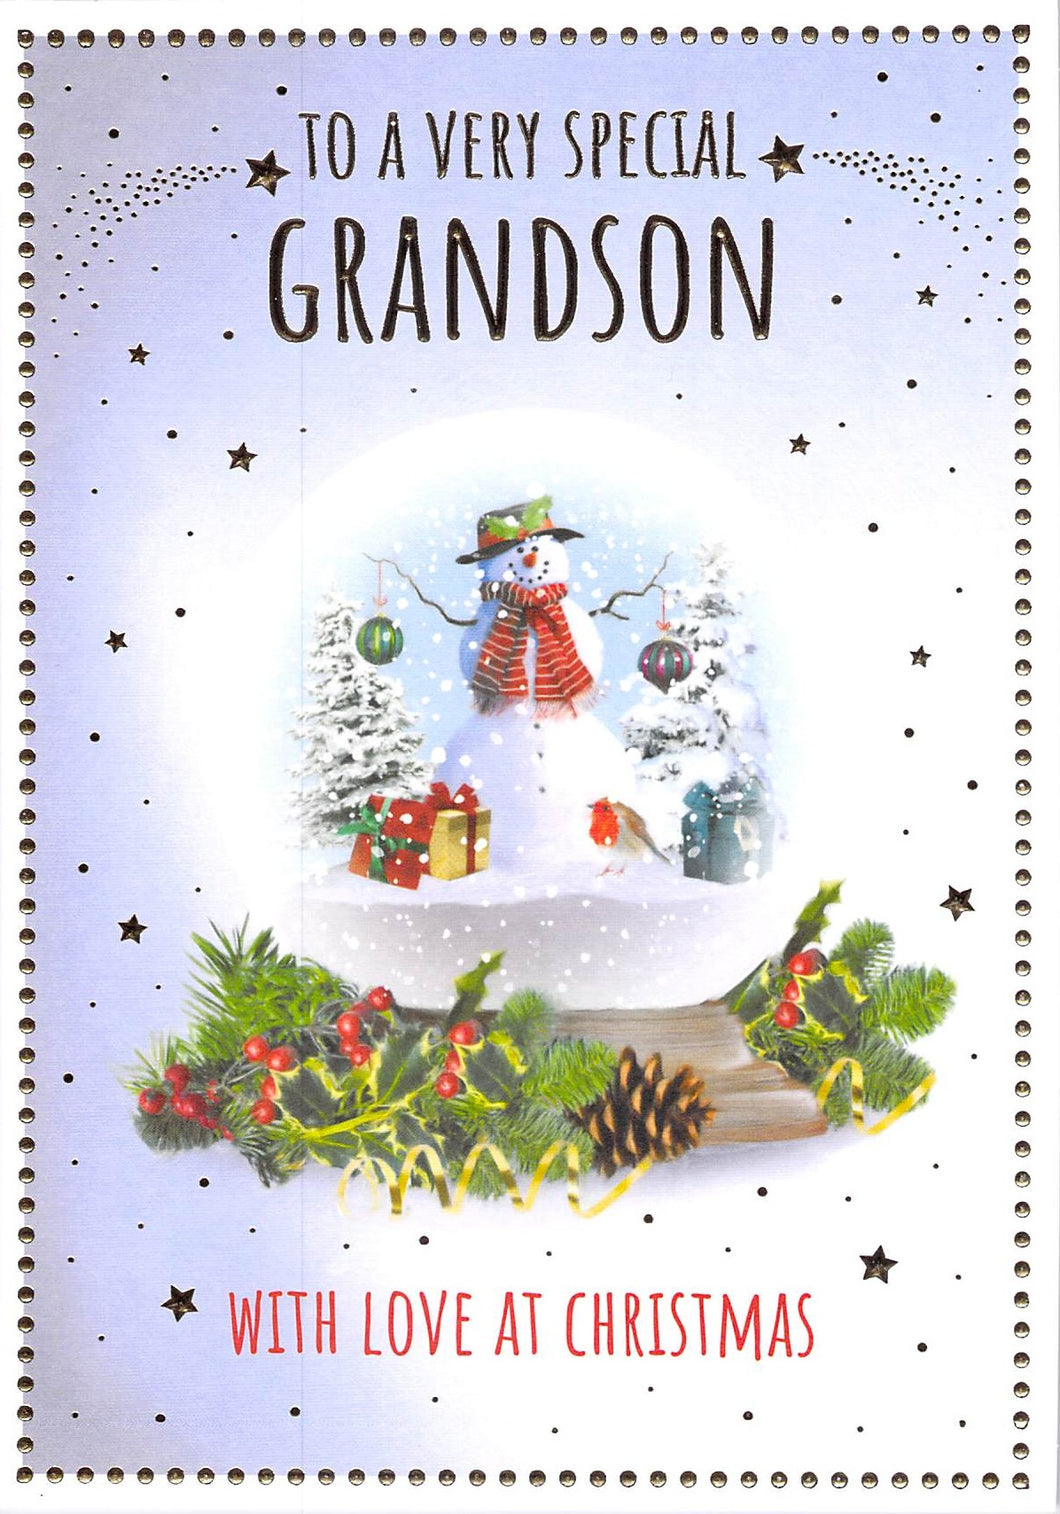 Christmas - Grandson - Snow Globe - Greeting Card  - Multi Buy Discount